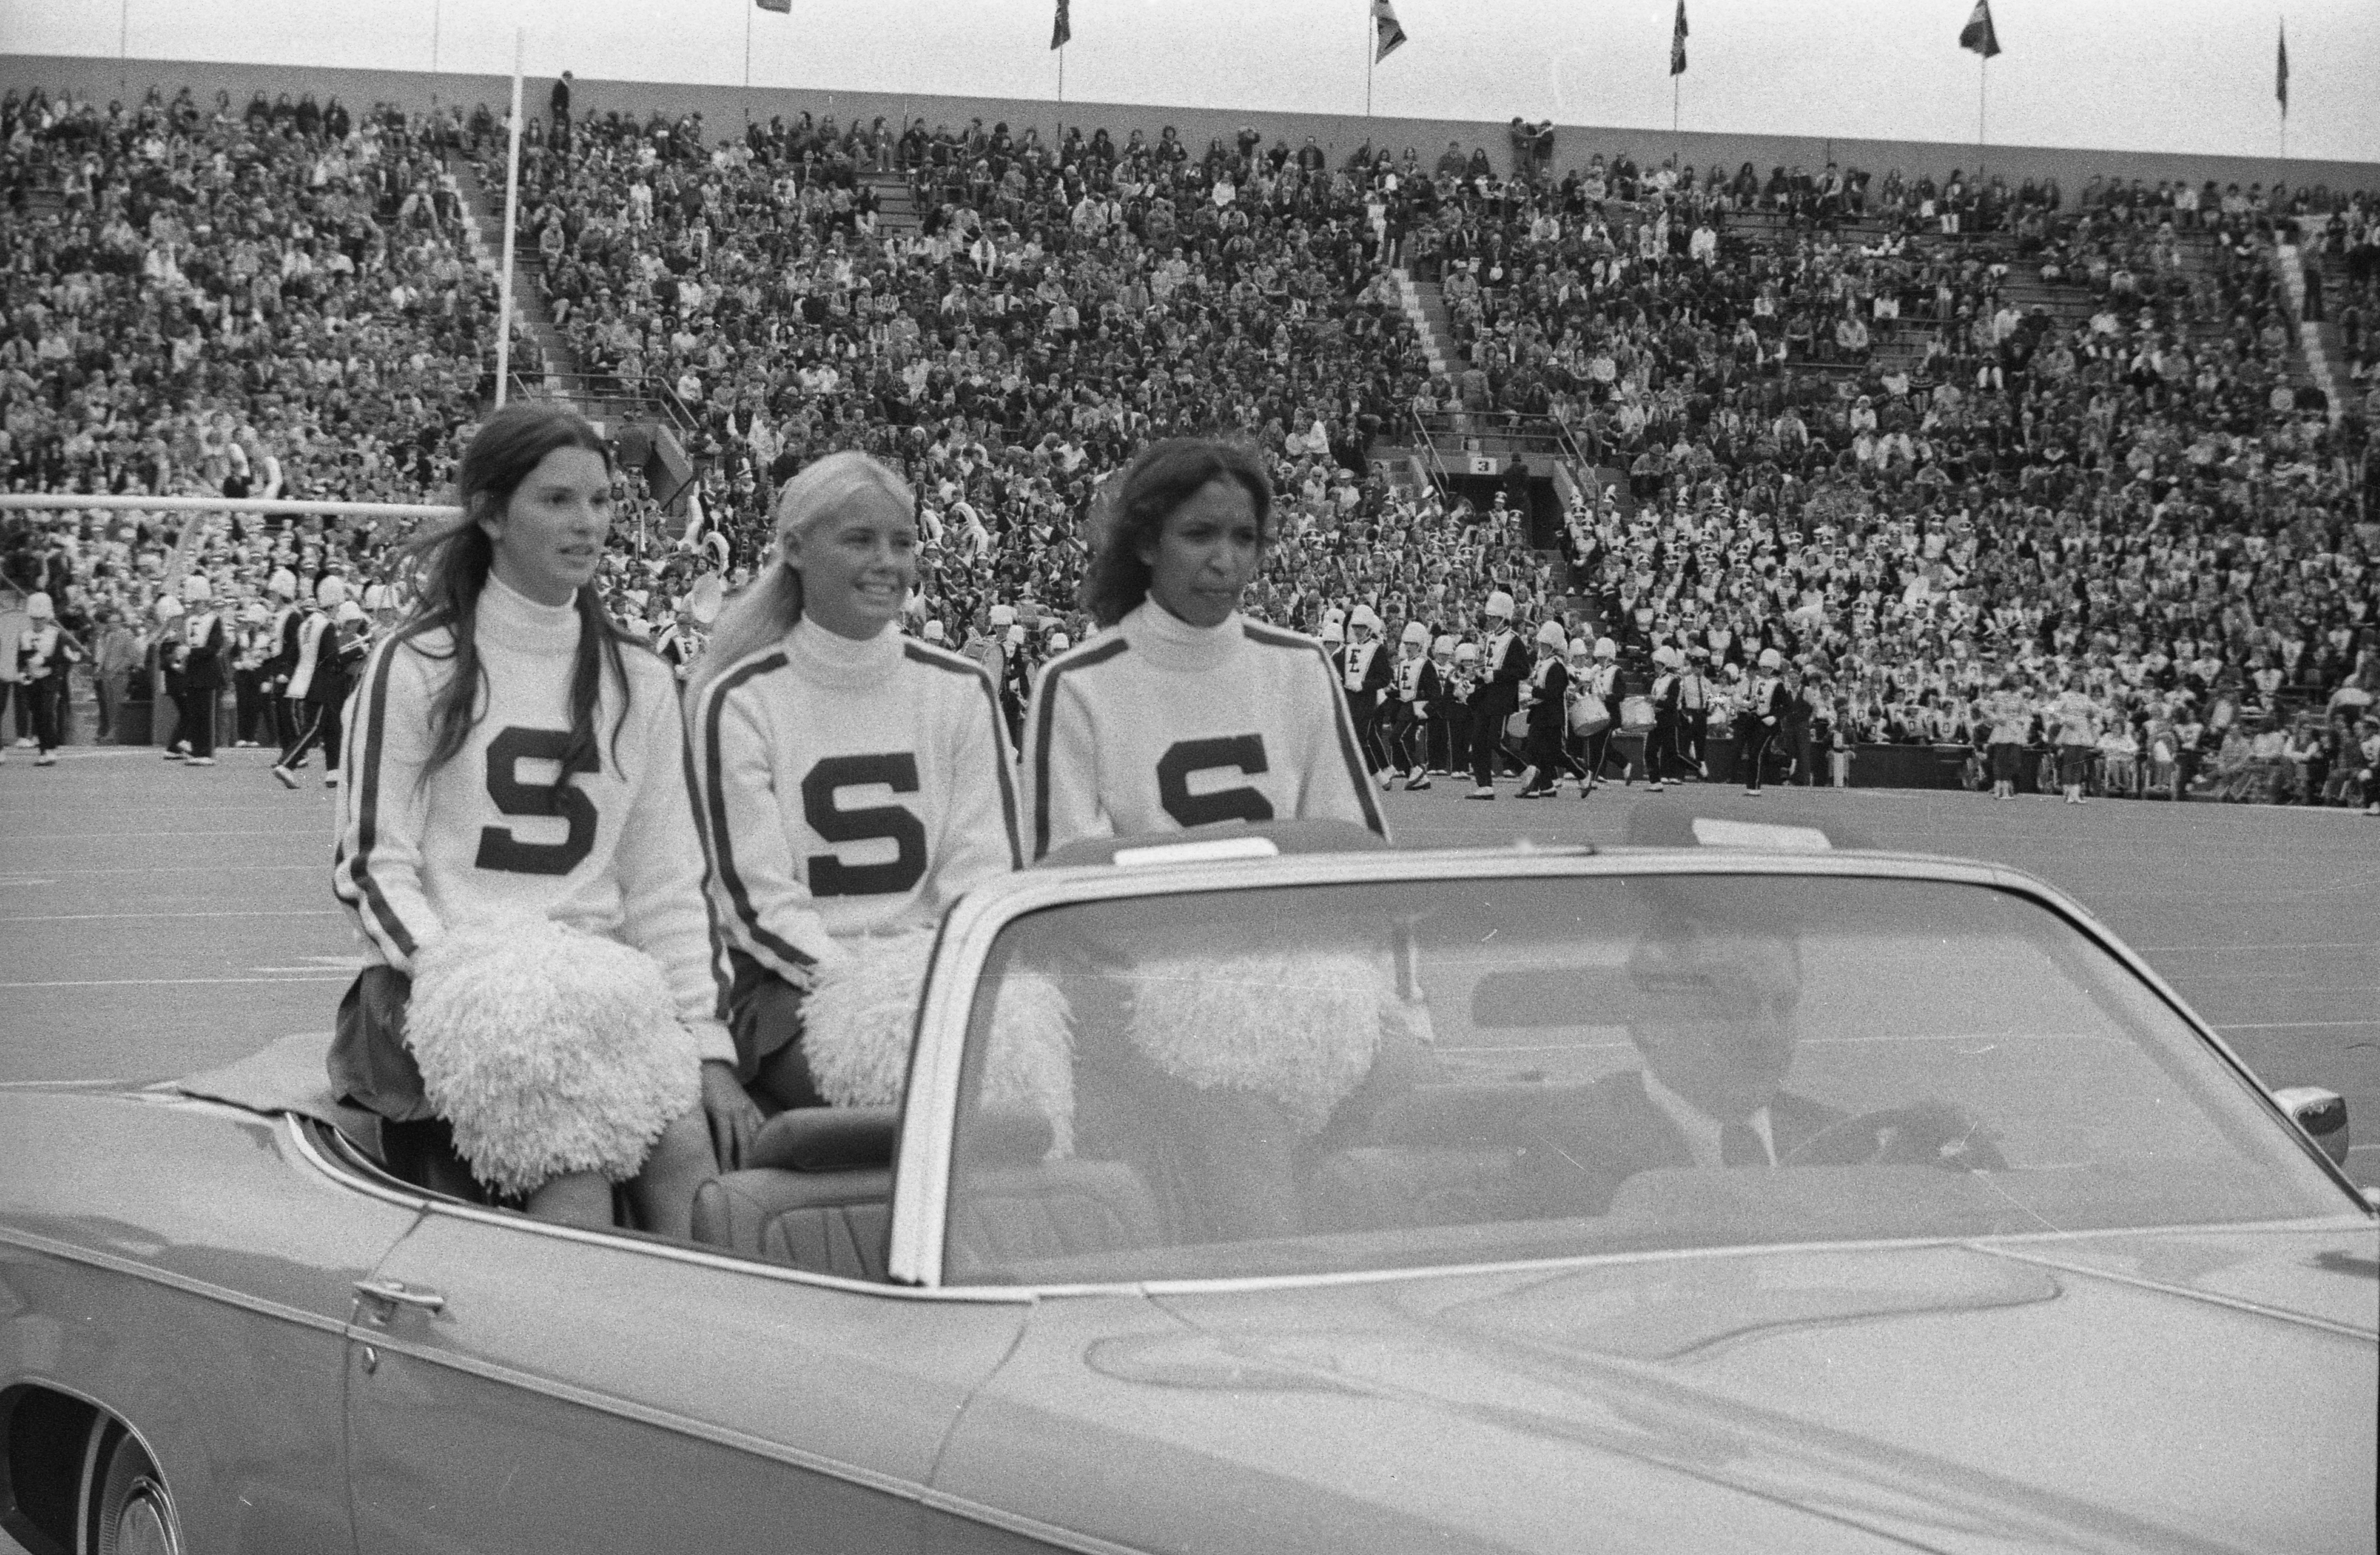 Cheerleaders at the MSU vs Georgia Tech football game, 1972